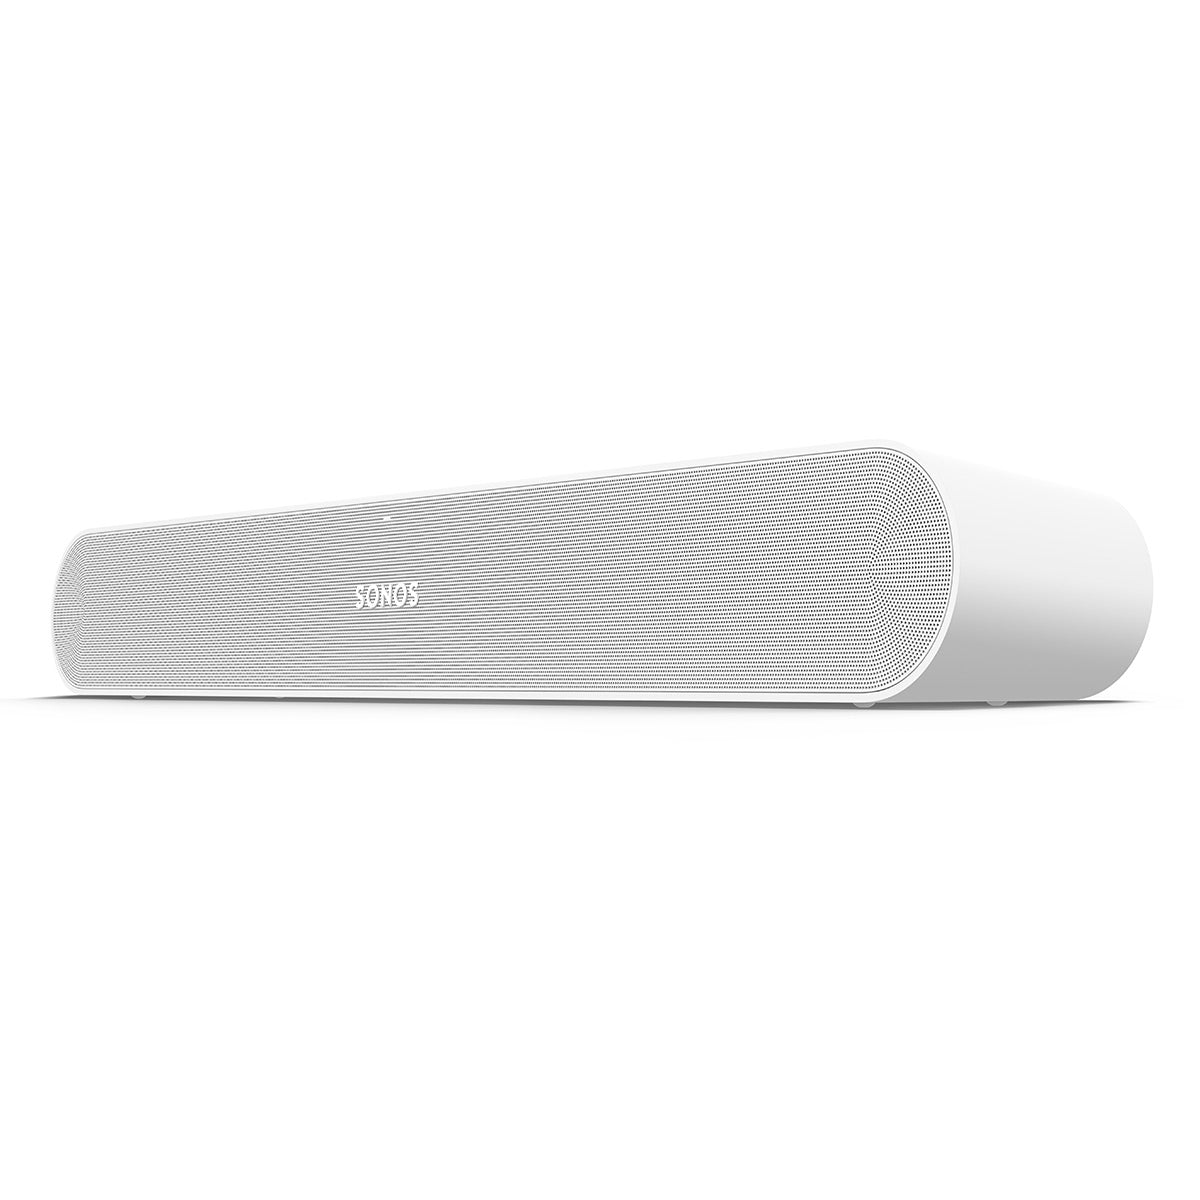 Sonos Entertainment Set with Ray Compact Soundbar (White) and Sub Mini Wireless Subwoofer (White)